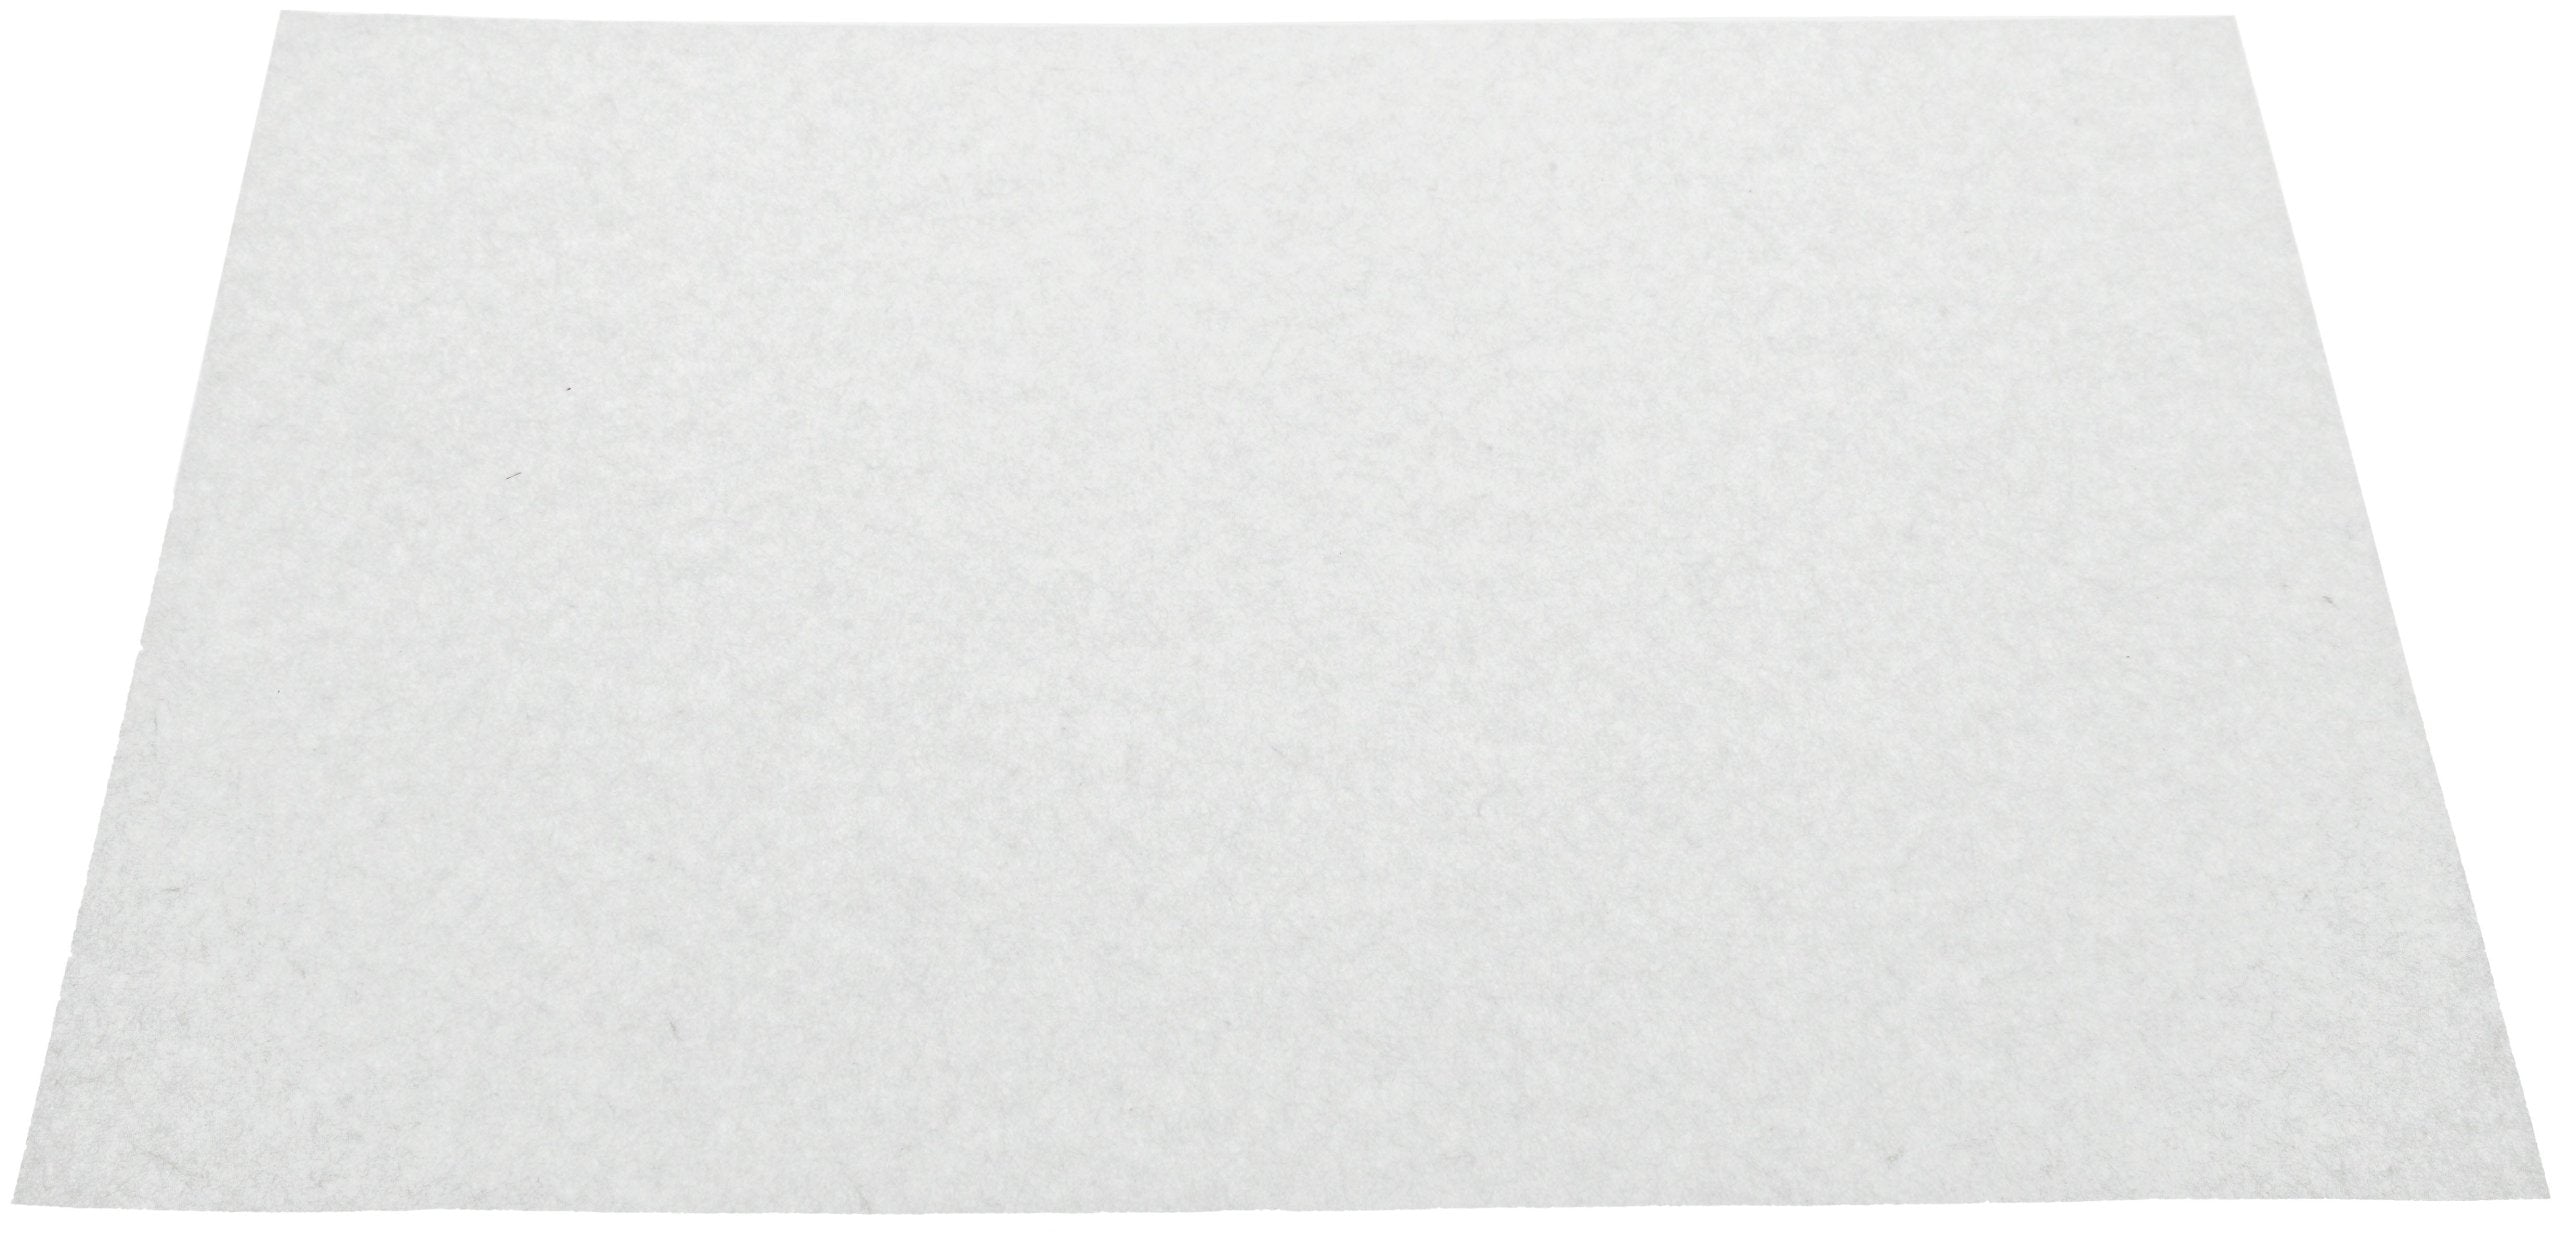 Whatman 10382581 Cellulose Chromatography Paper, Grade 2727 Chr Sheets, 19 x 19cm, 100/pk